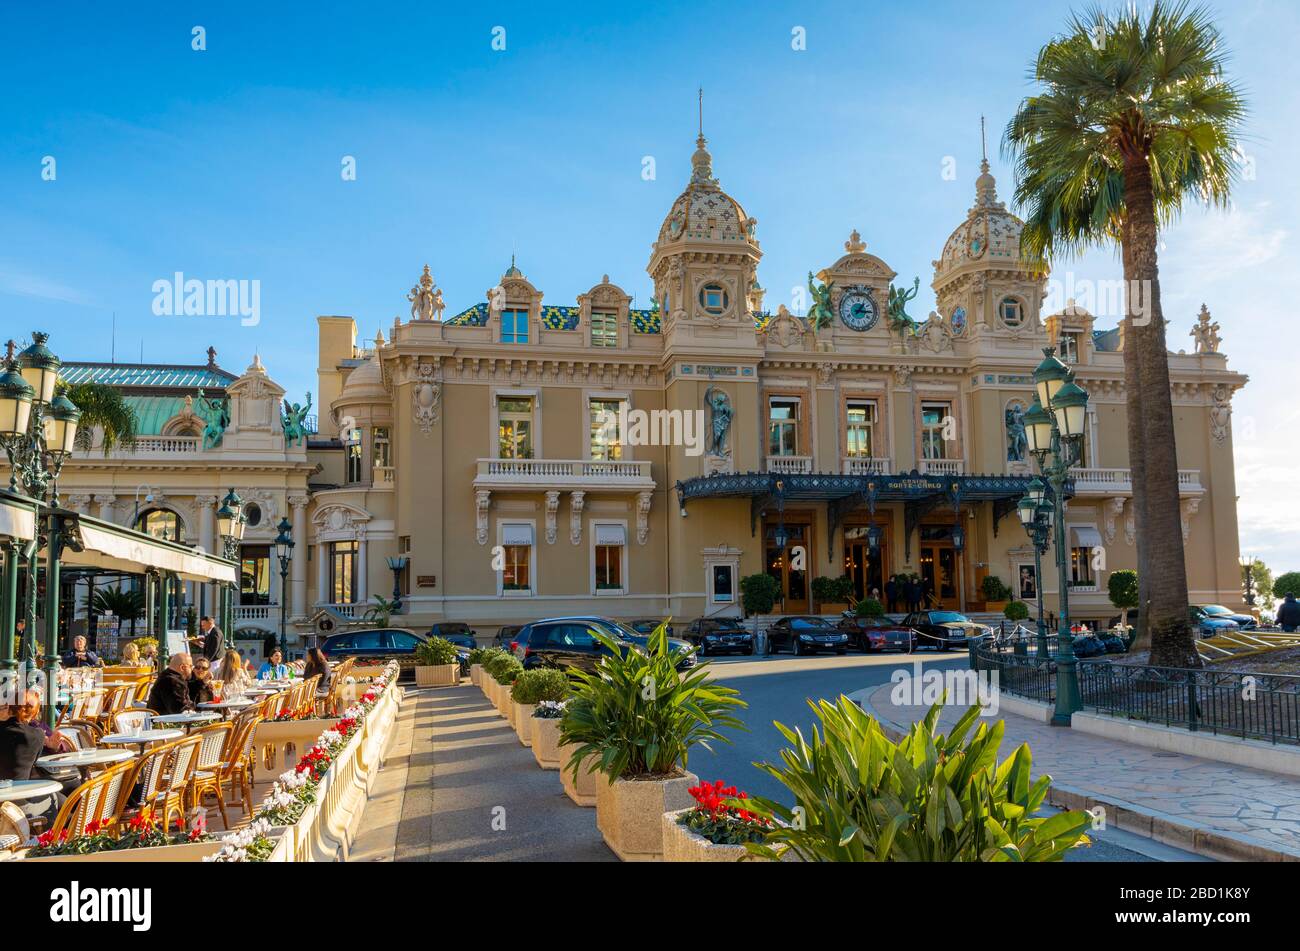 Monte Carlo Casino and Cafe de Paris, Monte Carlo, Monaco, Mediterranean, Europe Stock Photo